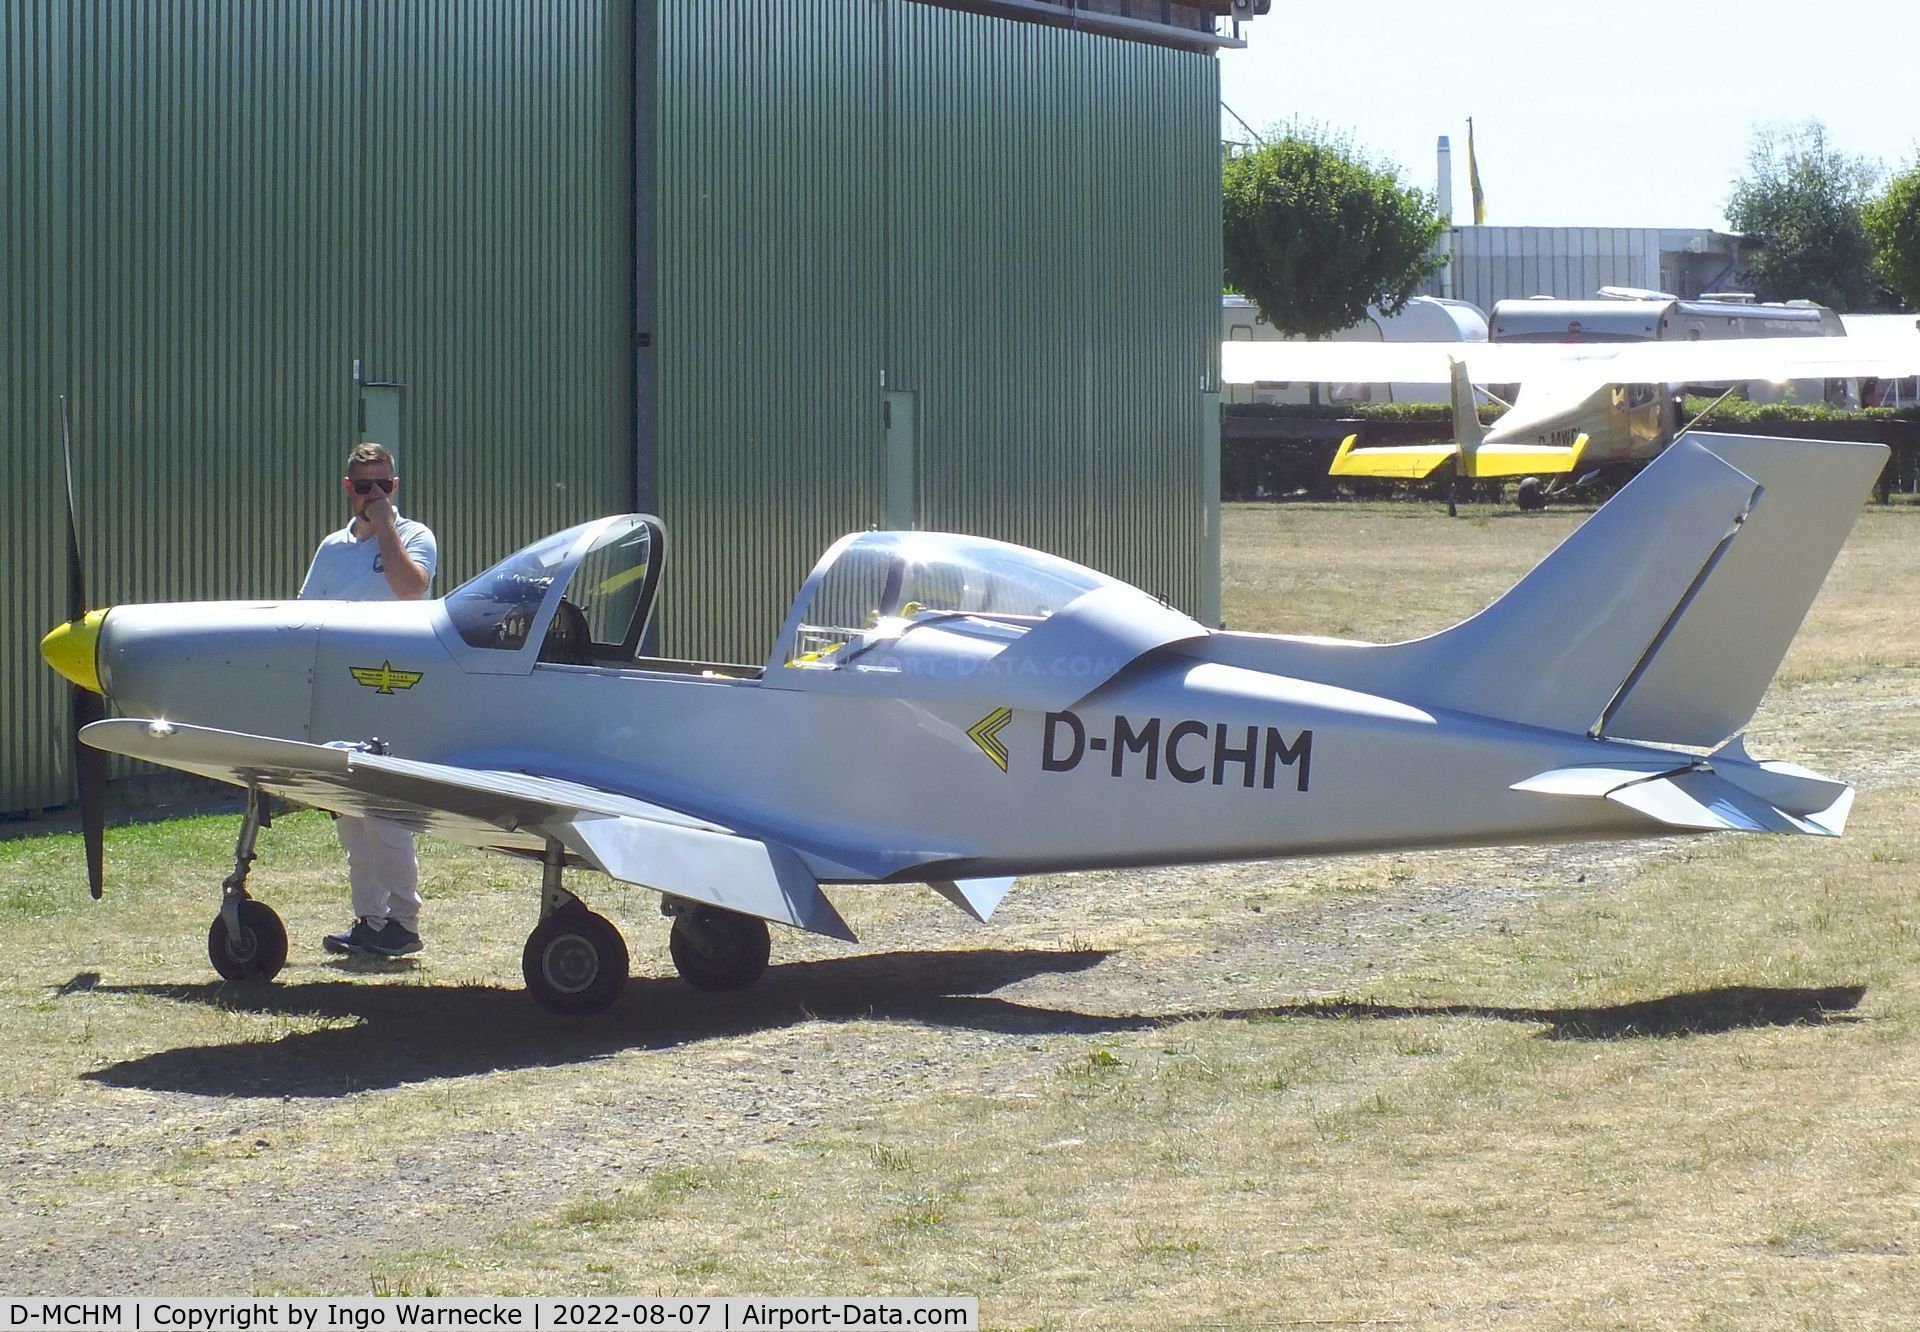 D-MCHM, Alpi Aviation Pioneer 300 C/N not found_D-MCHM, Alpi Aviation Pioneer 300 at the 2022 Flugplatz-Wiesenfest airfield display at Weilerswist-Müggenhausen ultralight airfield